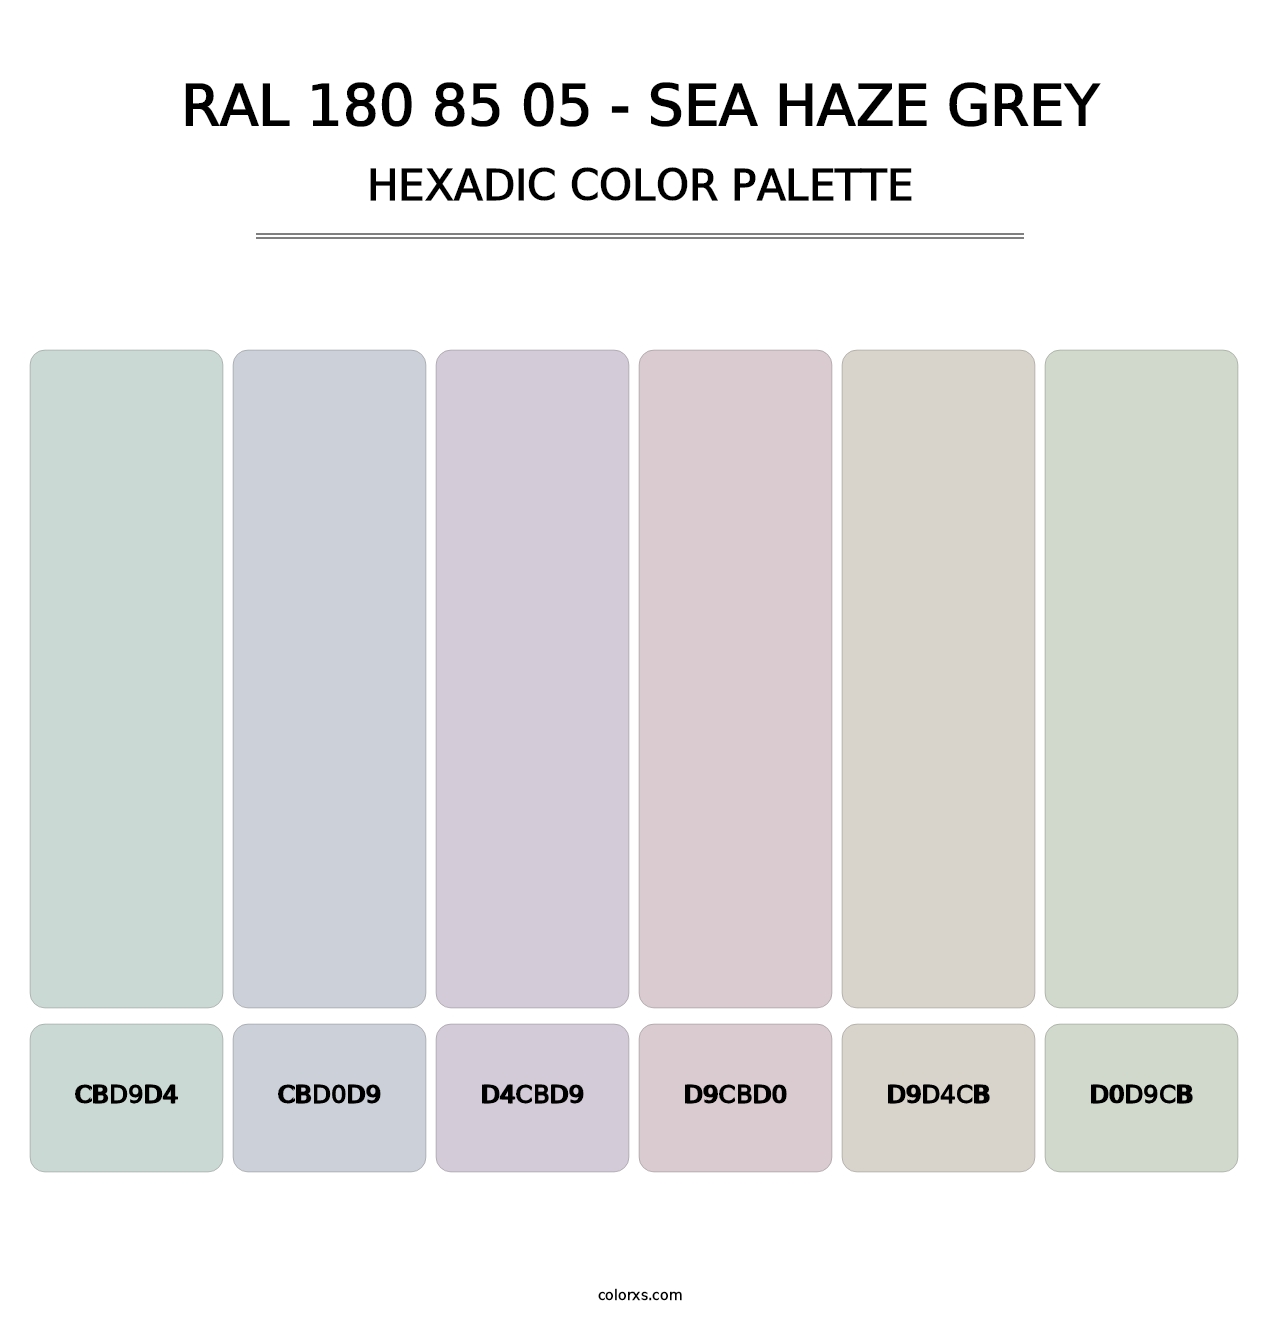 RAL 180 85 05 - Sea Haze Grey - Hexadic Color Palette